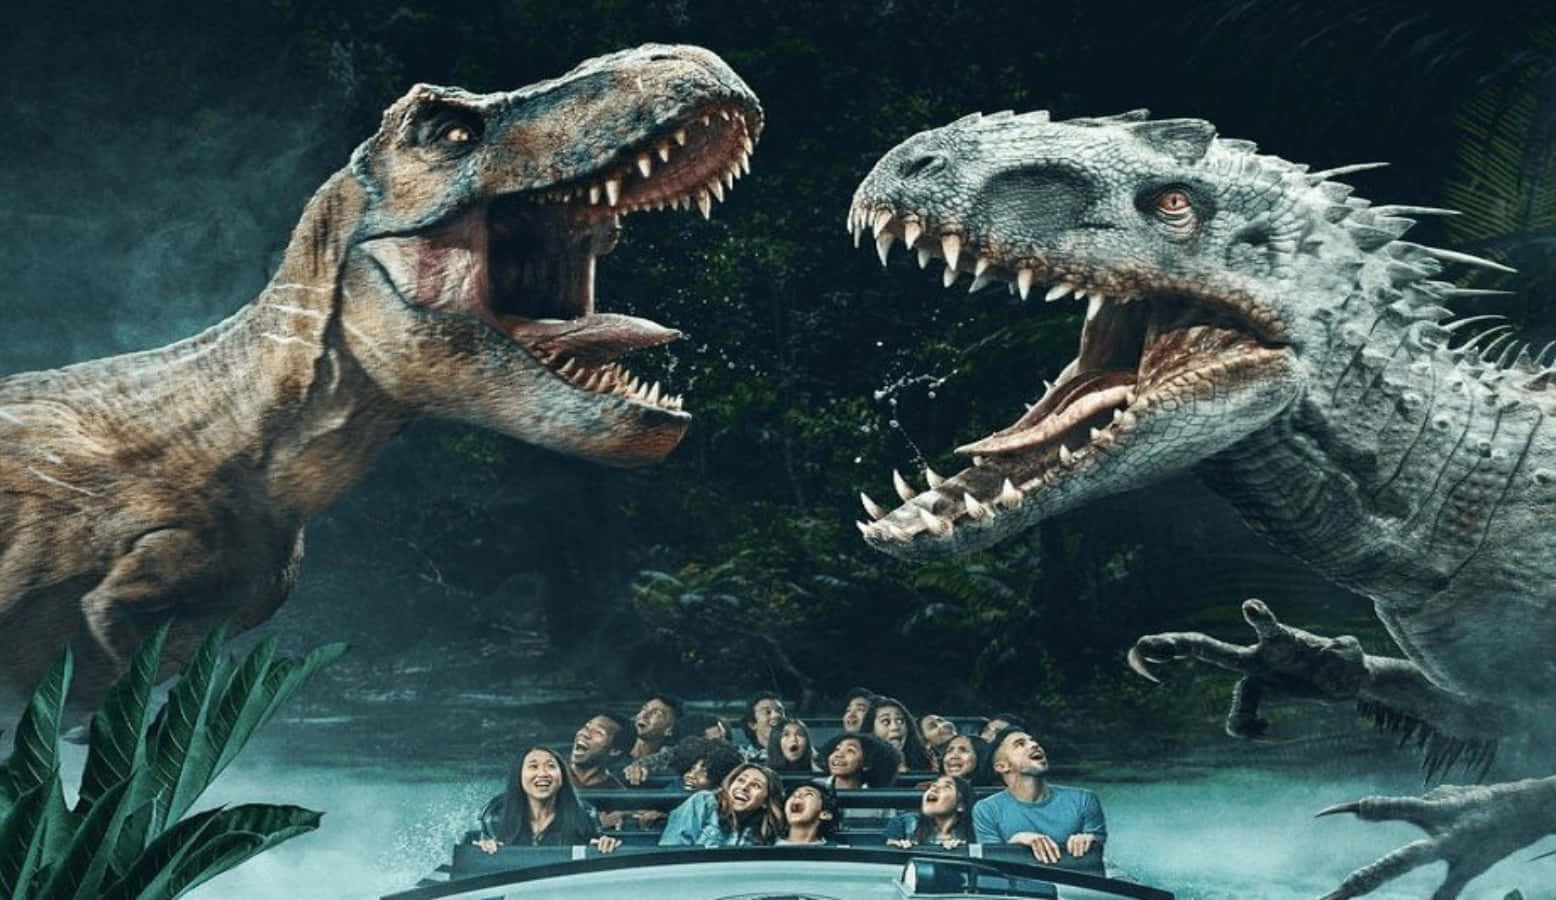 Take a breathtaking journey through Jurassic World